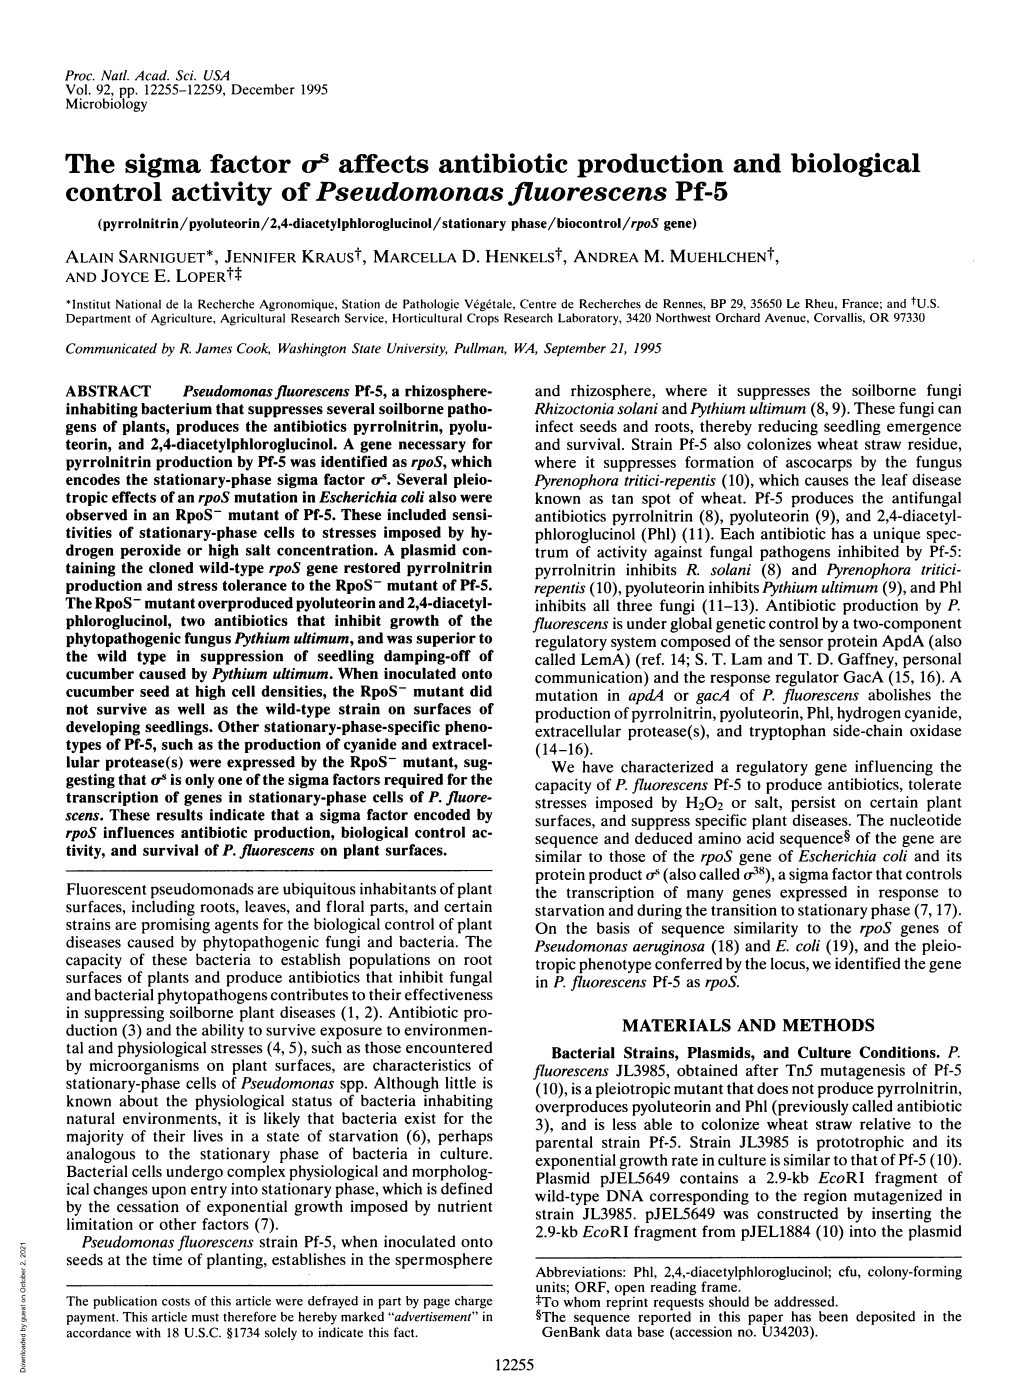 Control Activity Ofpseudomonasfluorescens Pf-5